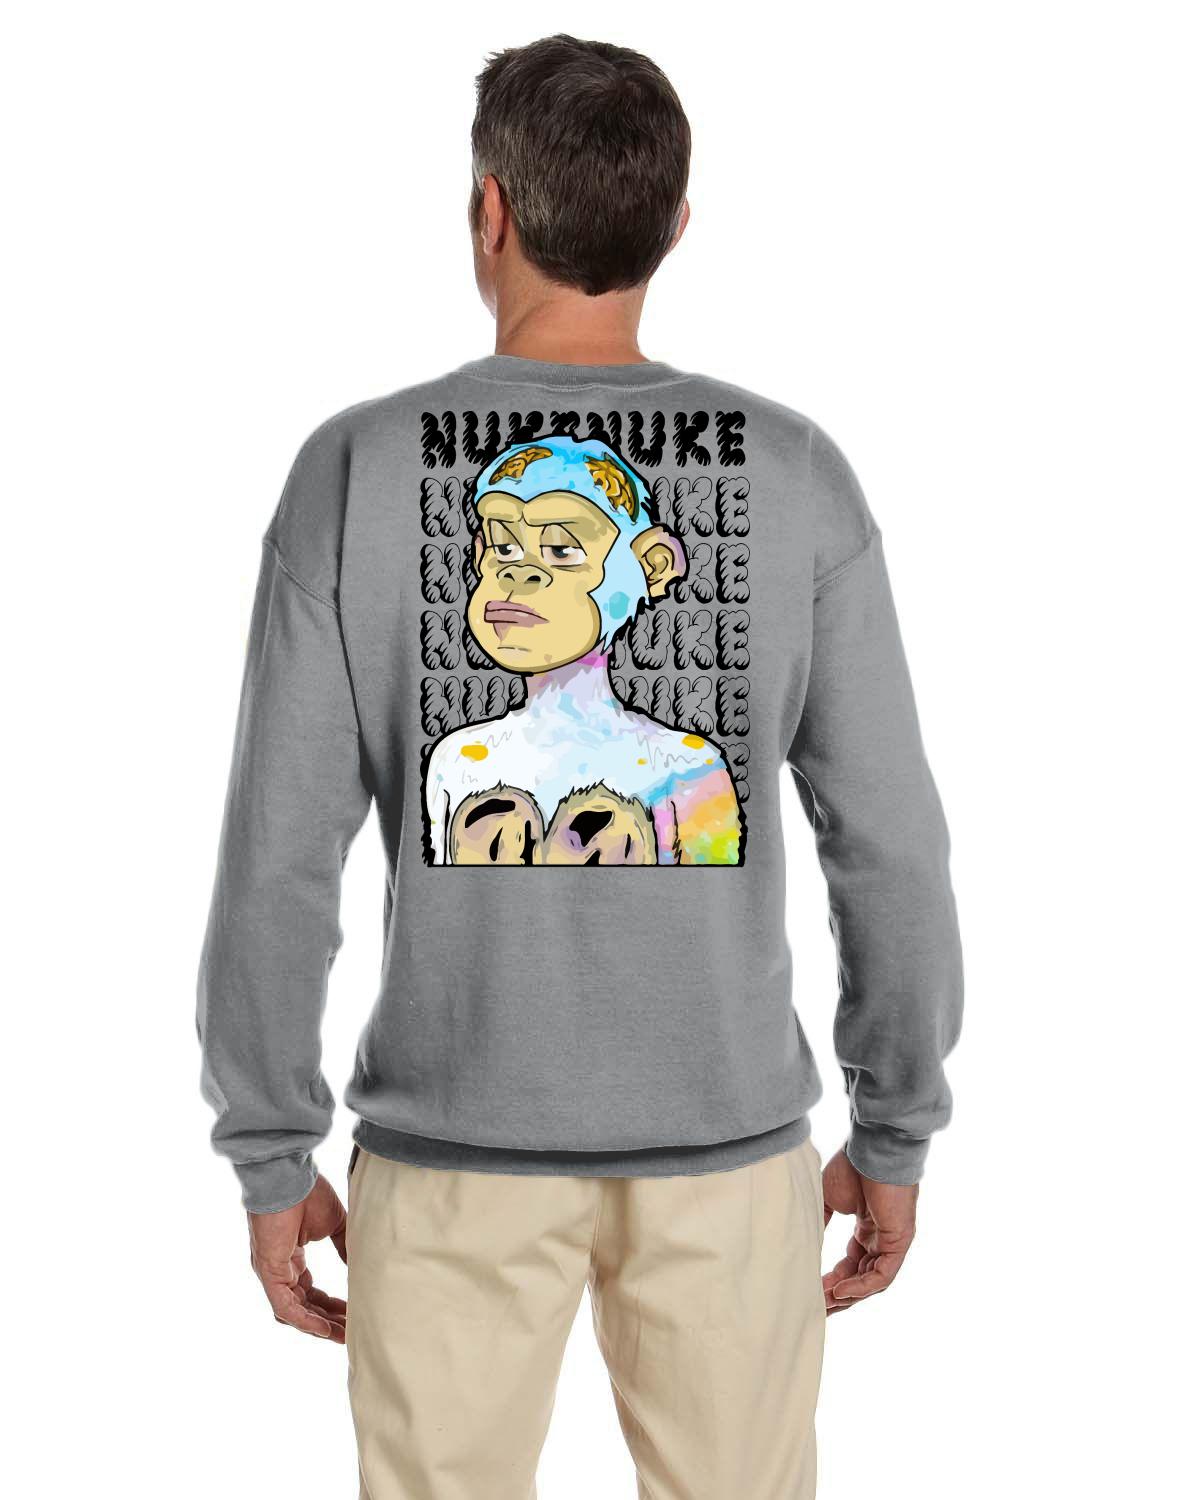 NAC NUKE crew neck sweater